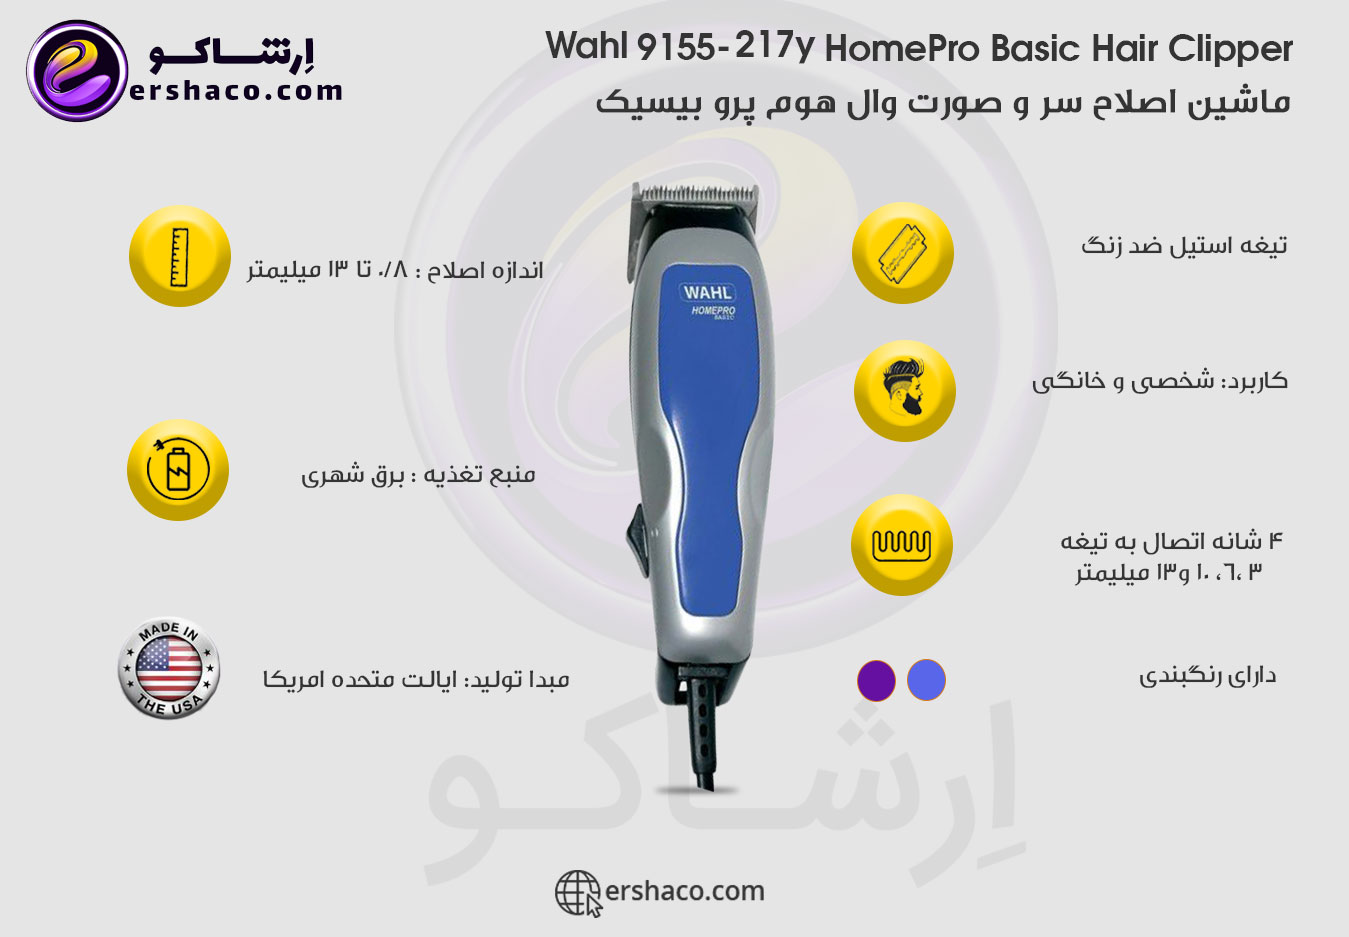 Wahl-9155-217y-HomePro-Basic-Hair-Clipper.jpg